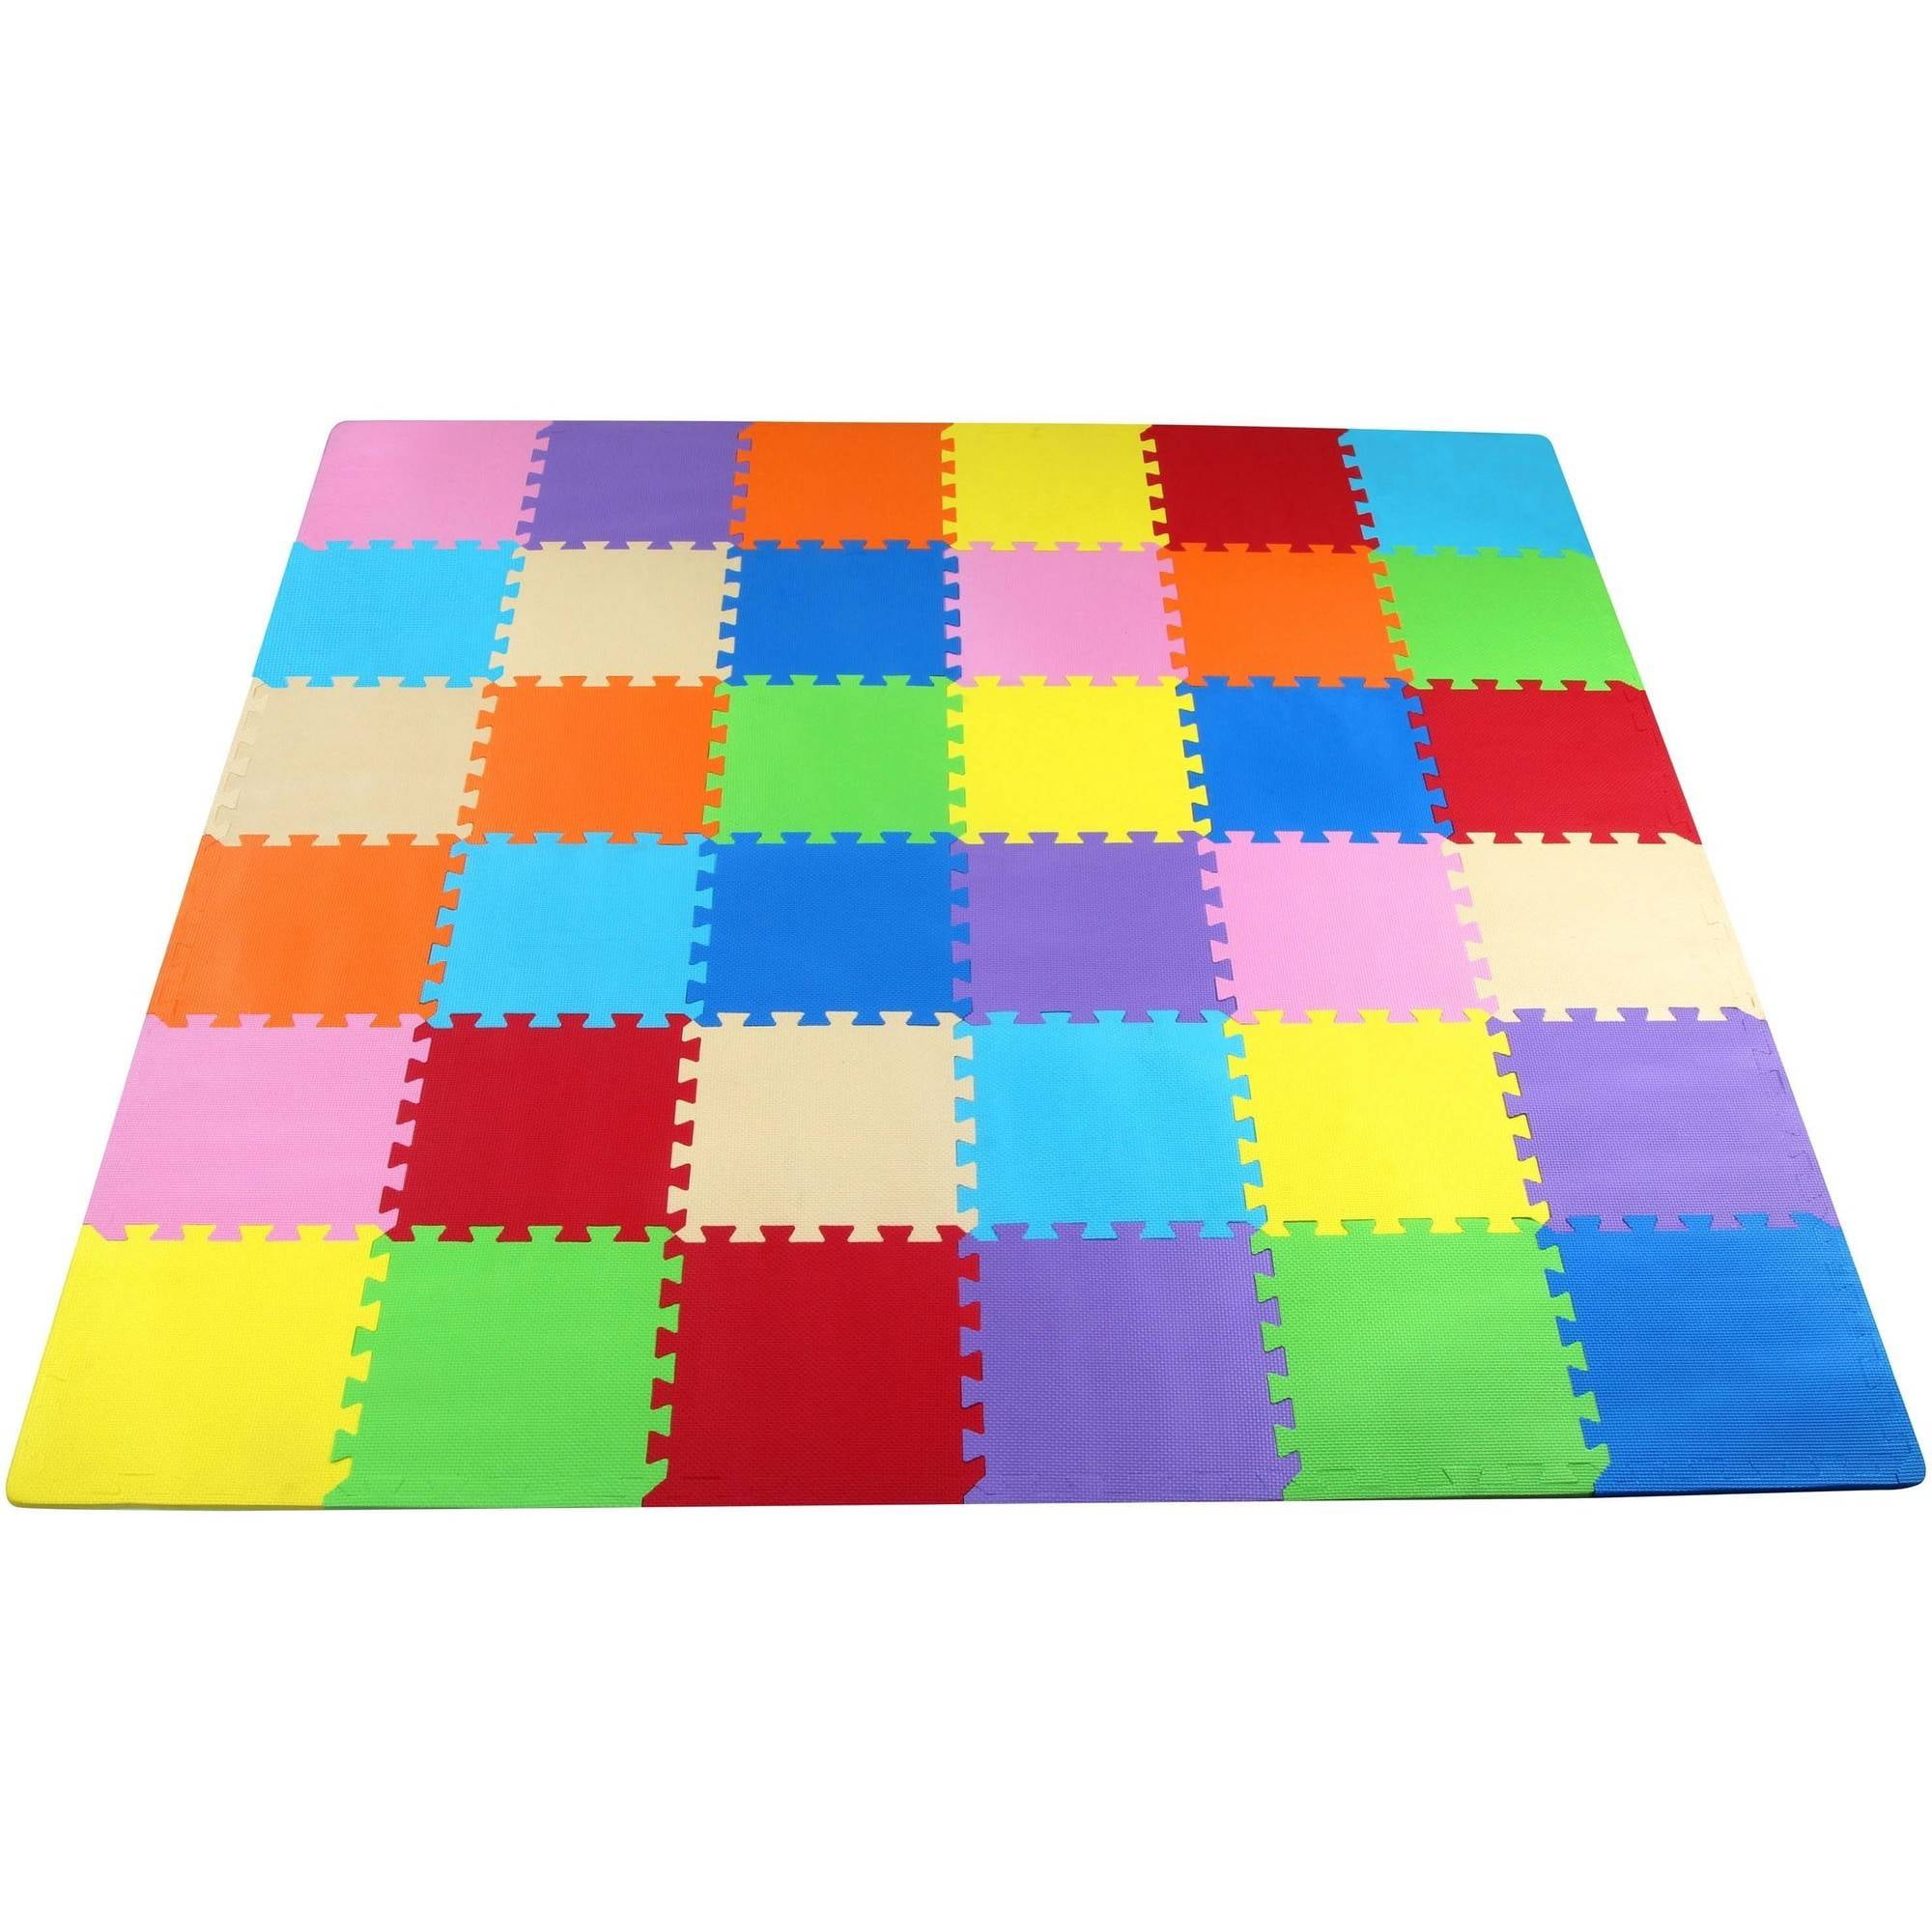 New Multi Coloured Play Mat Interlocking 9 Pc Indoor Kids Family Fun Exercise 